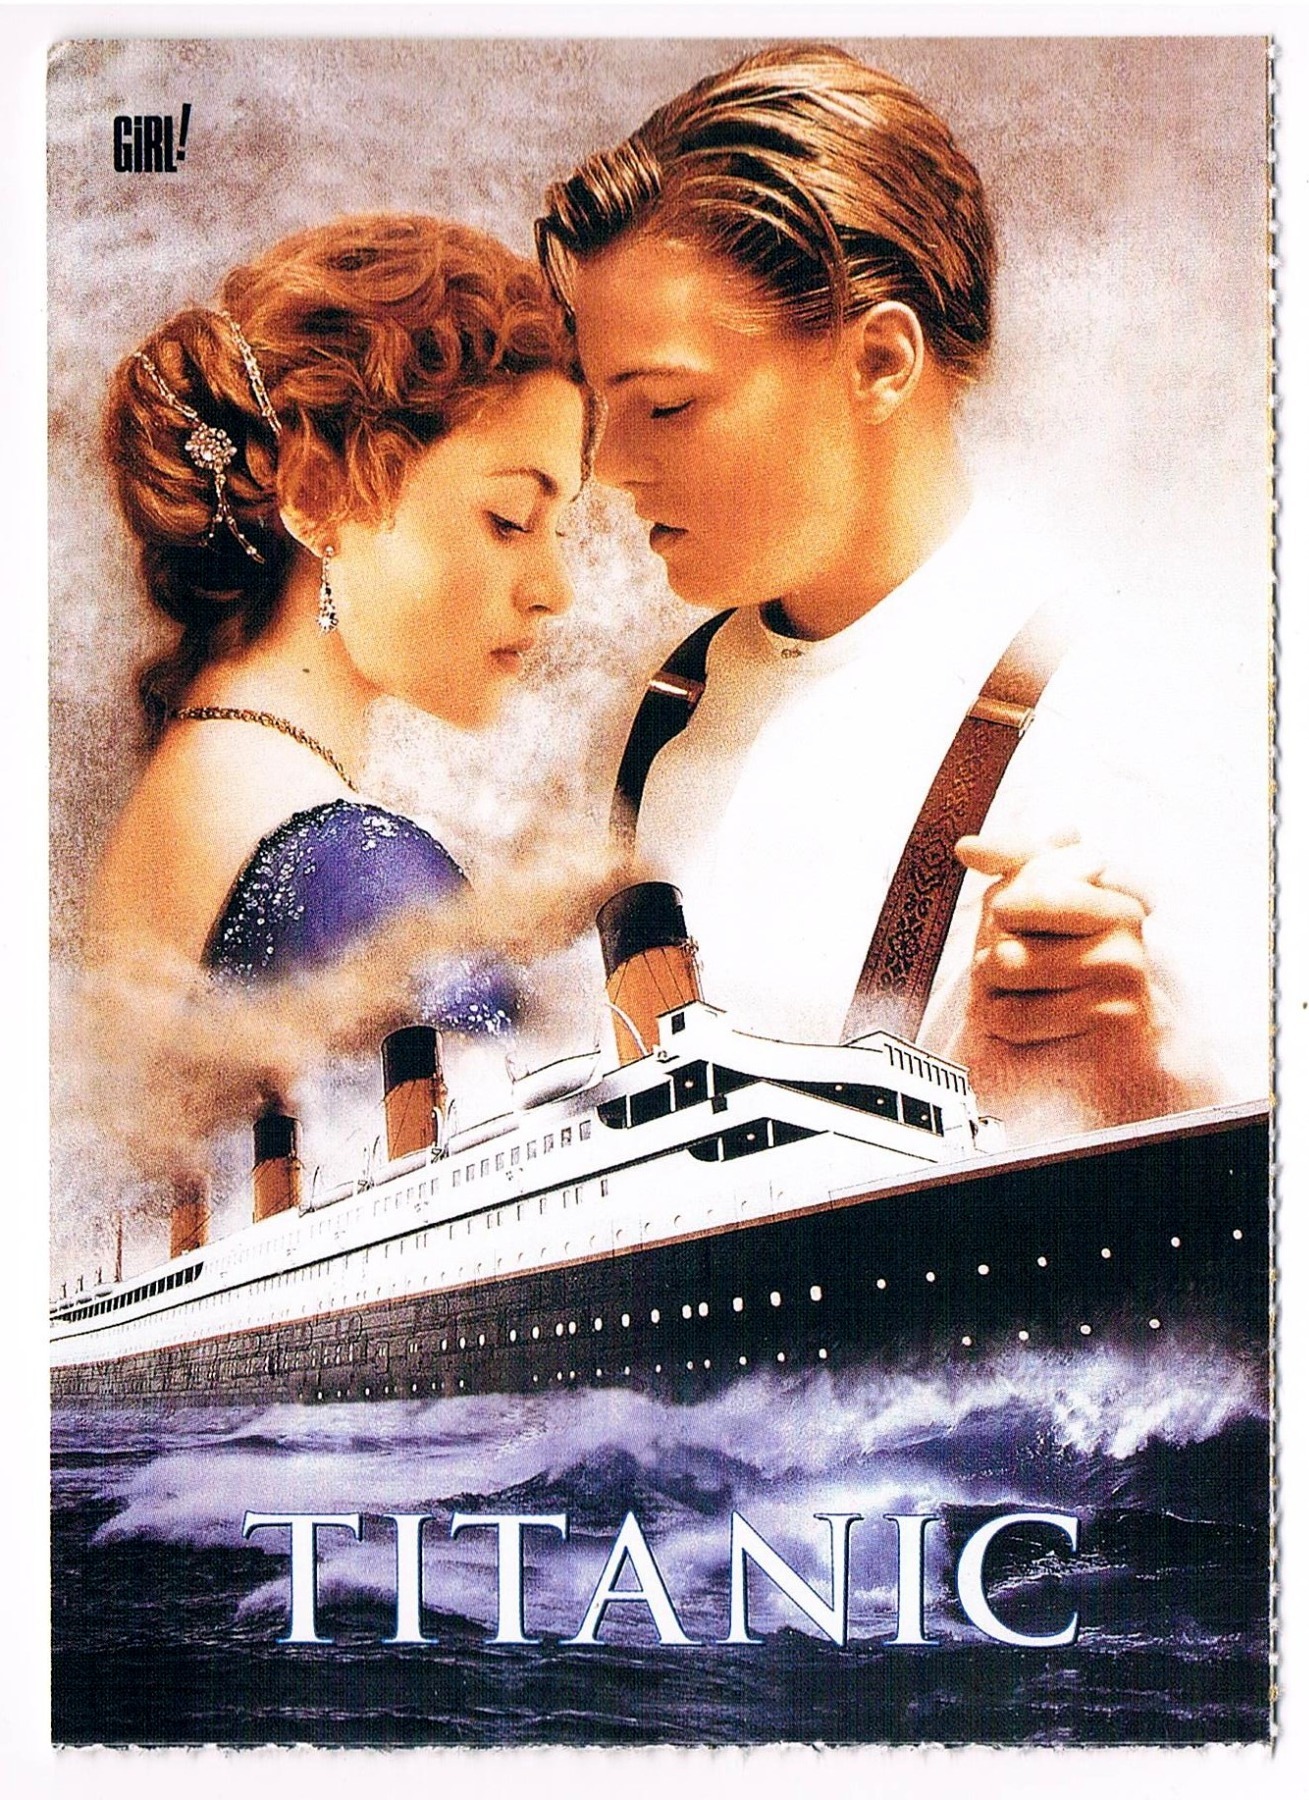 Titanic Postkarte Mit Rose Dewitt Kate Winslet And Jack Dawson Leonardo Dicaprio Online 